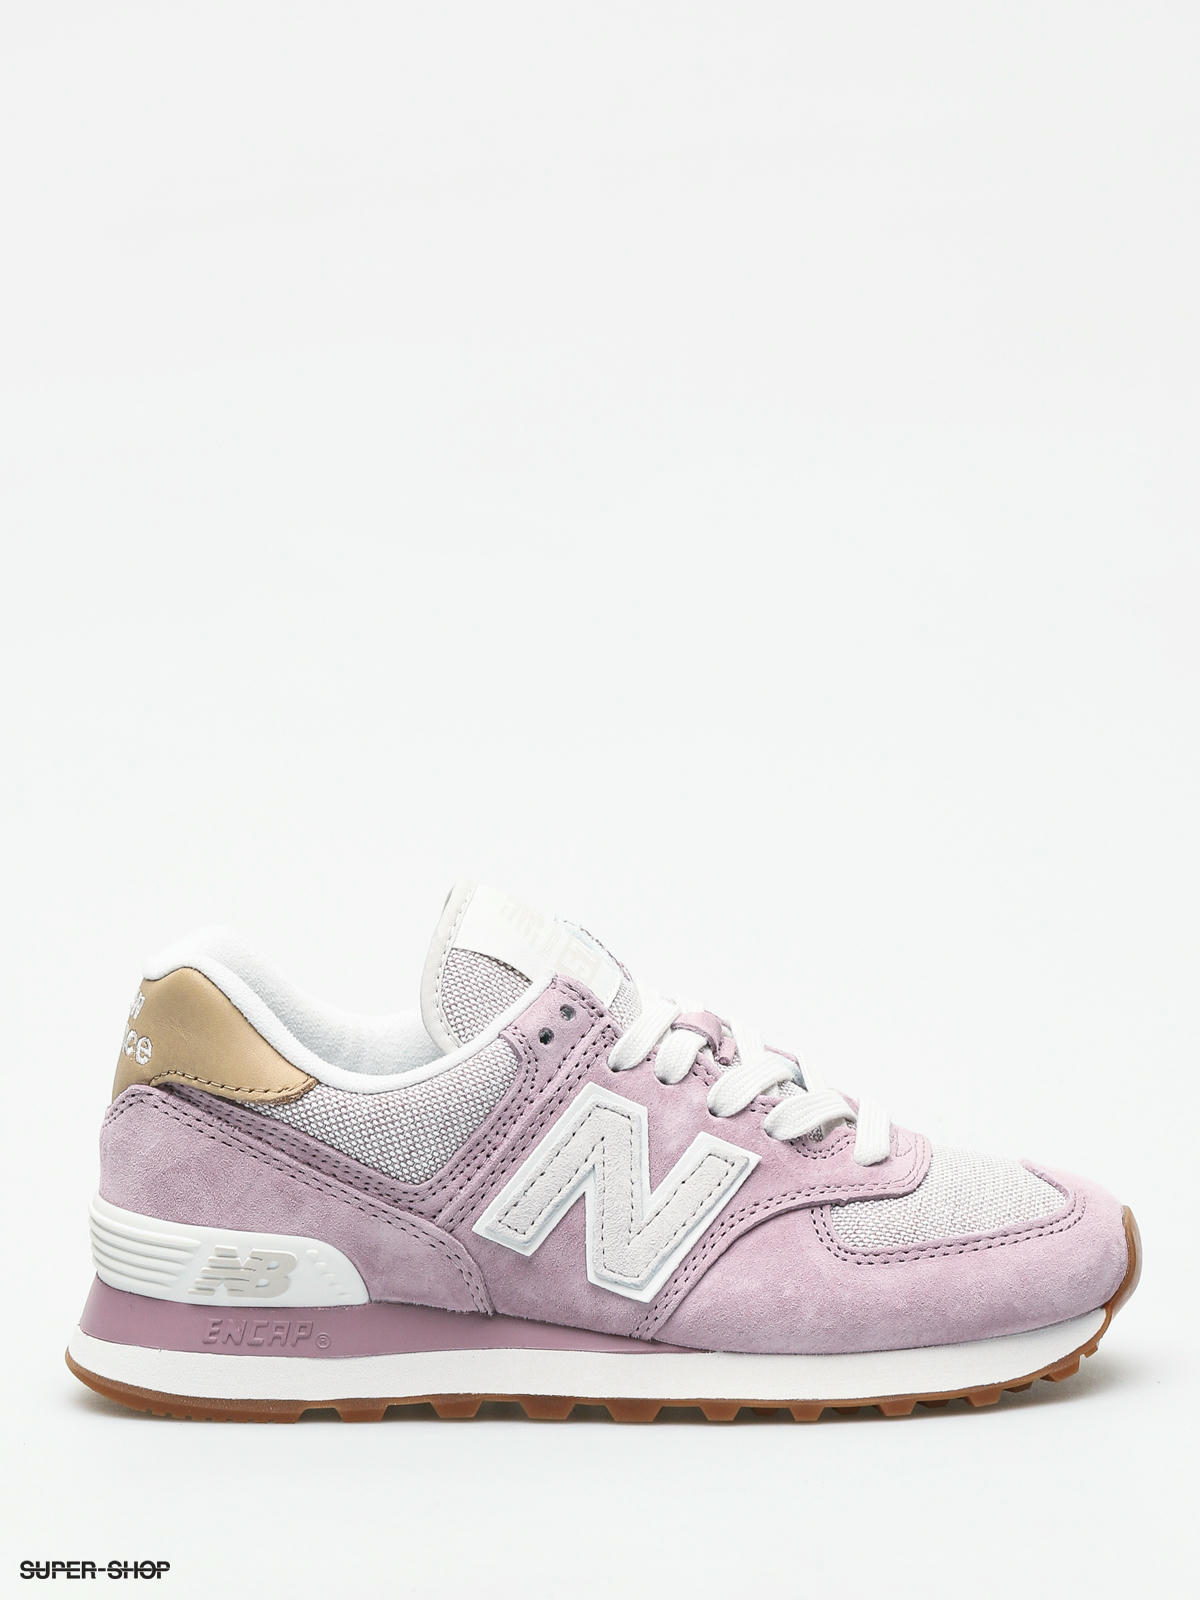 New Balance 574 Shoes Wmn (cashmere)